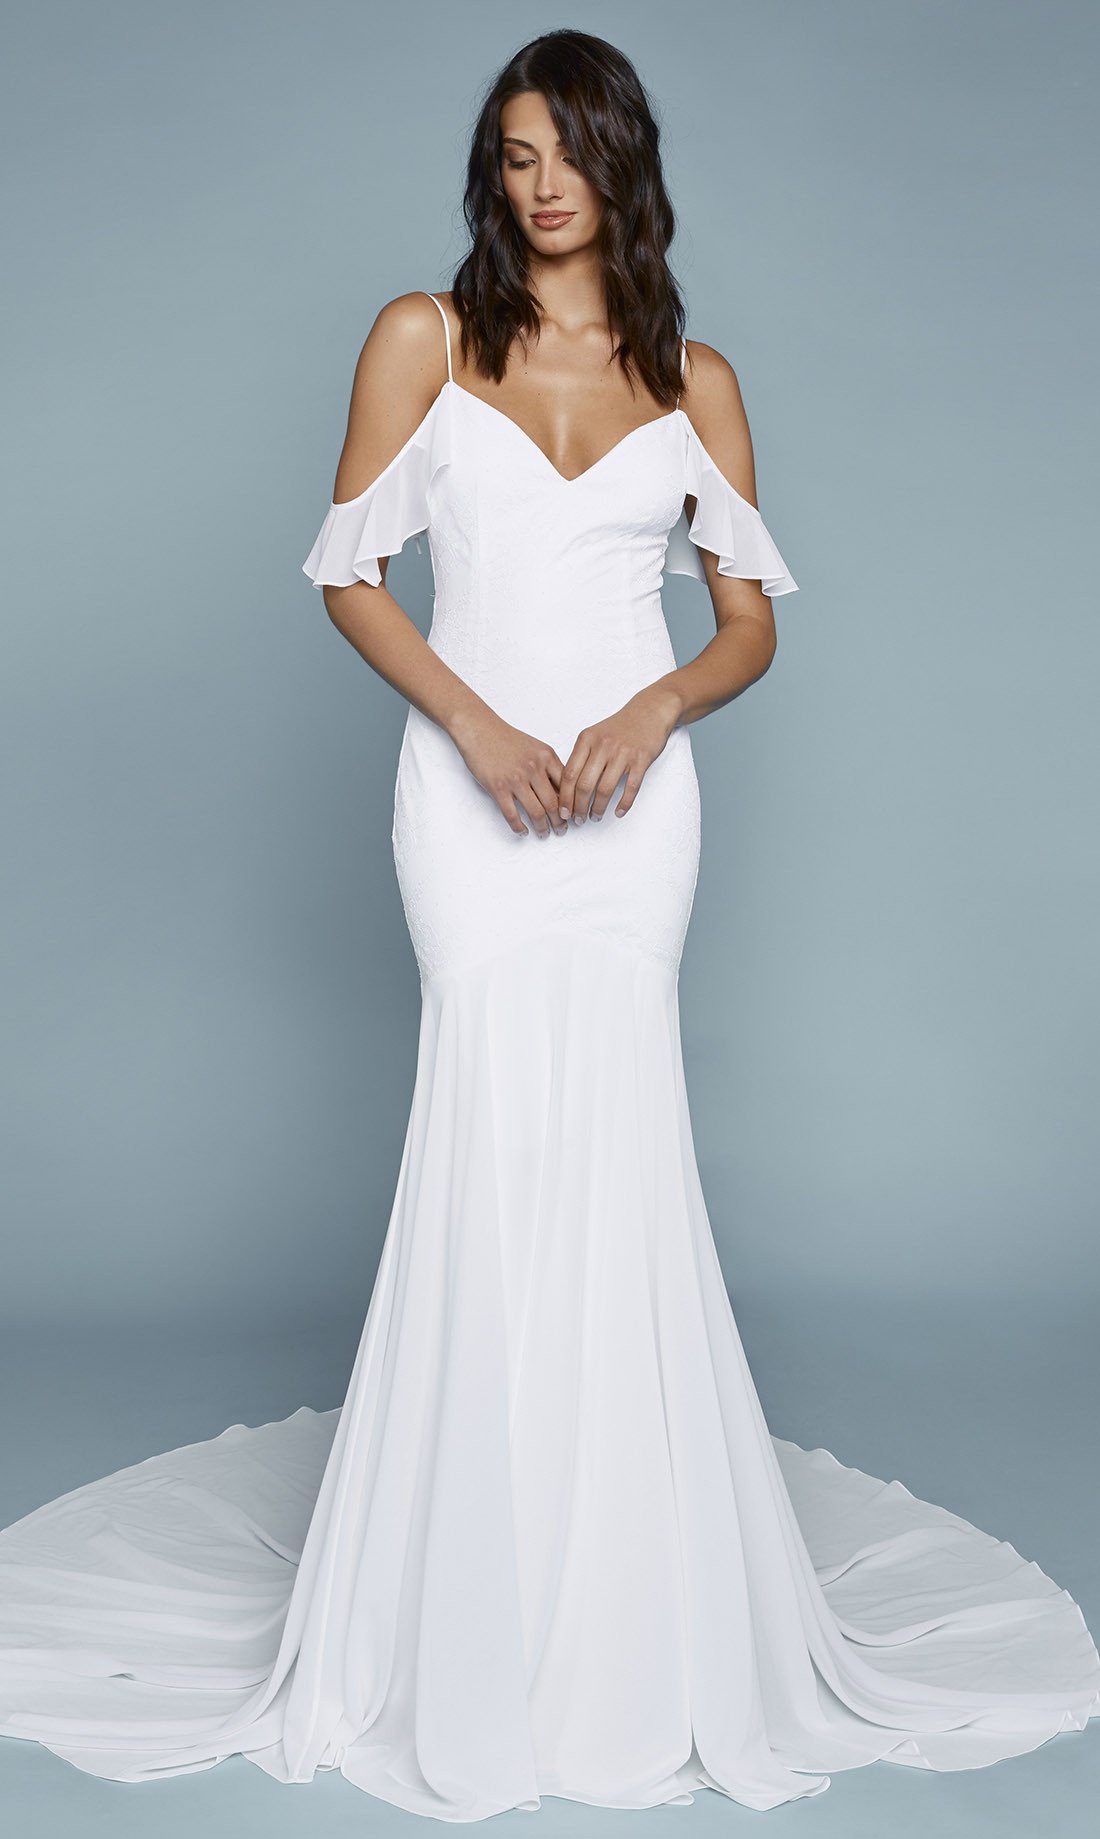 Katie May Tulum Chantilly Gown New Wedding Dress Save 23% - Stillwhite